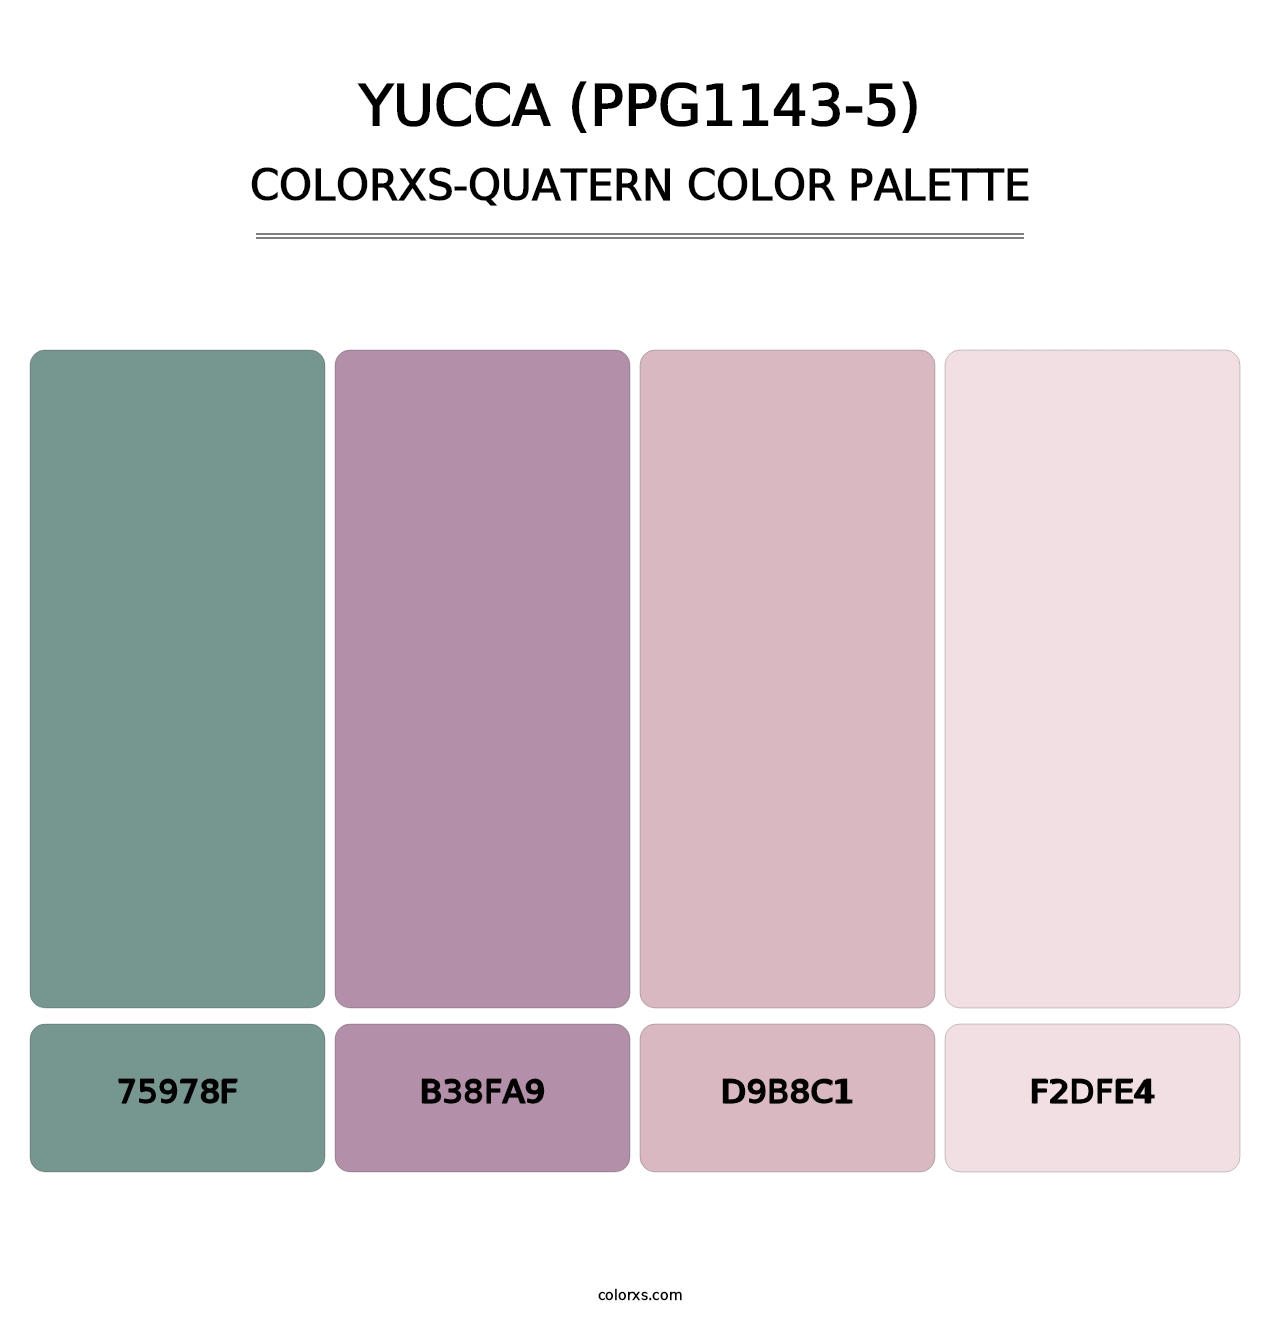 Yucca (PPG1143-5) - Colorxs Quatern Palette